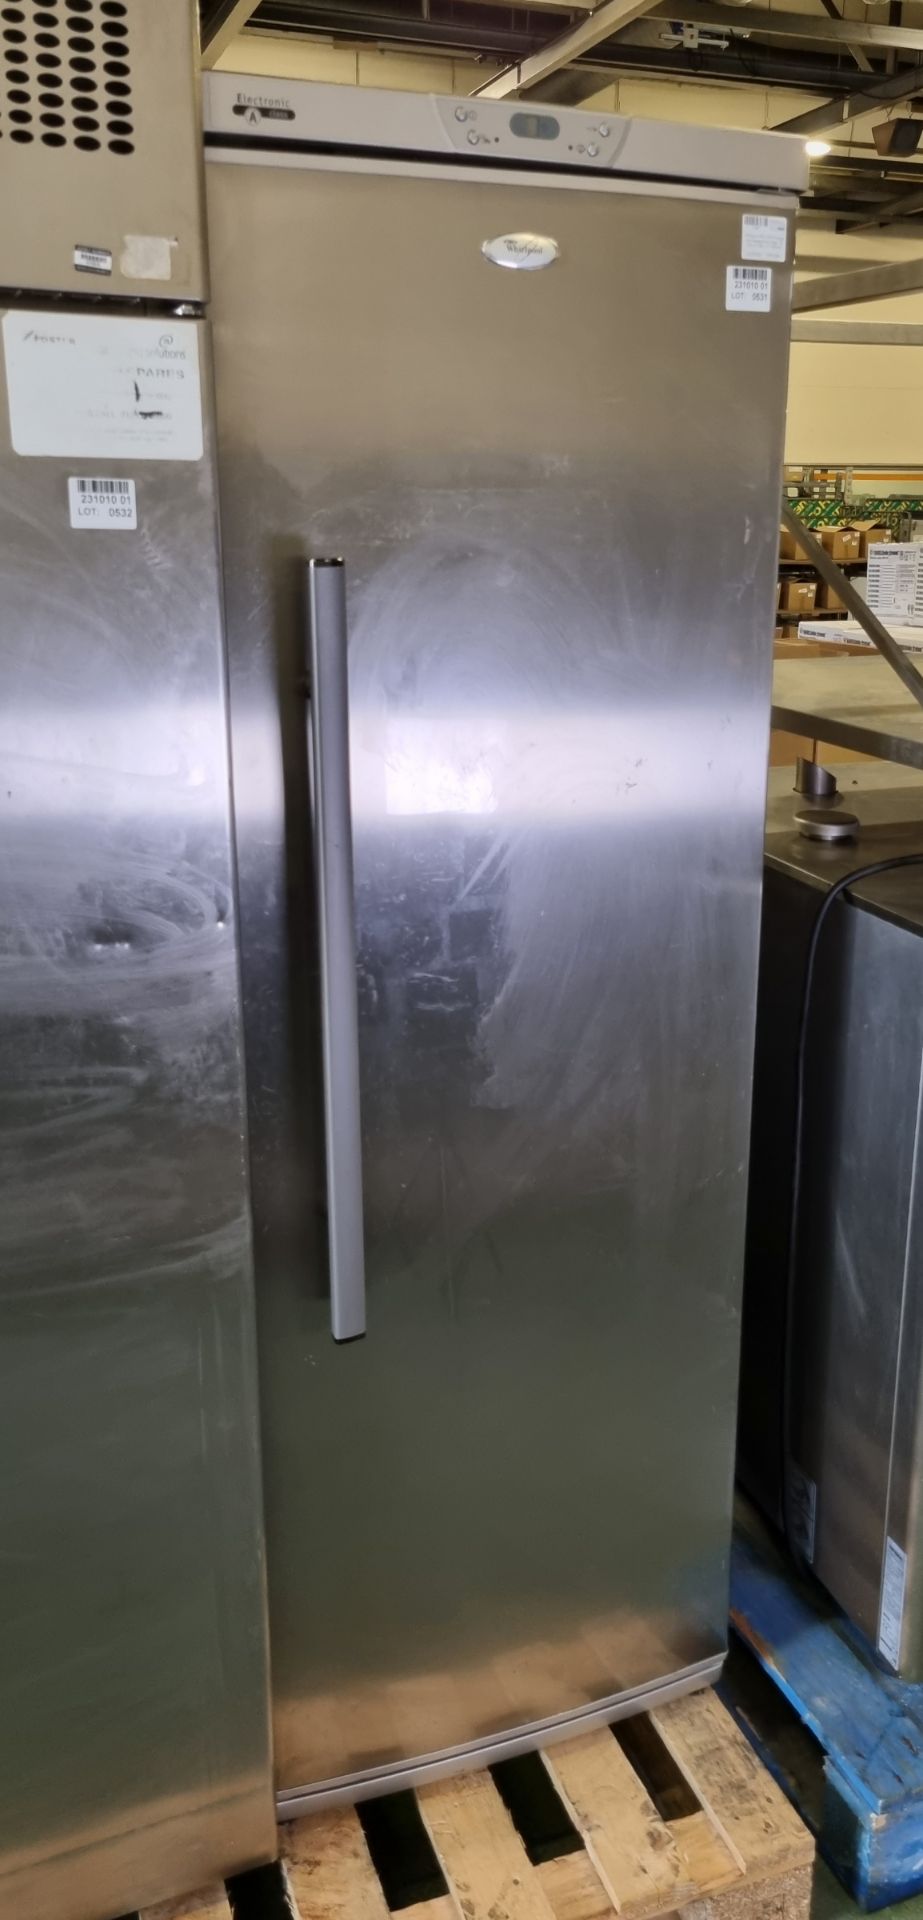 Whirlpool Electronic A Class ARC1790/IX single door freestanding fridge - W 600 x D 580 x H 1800mm - Image 2 of 3